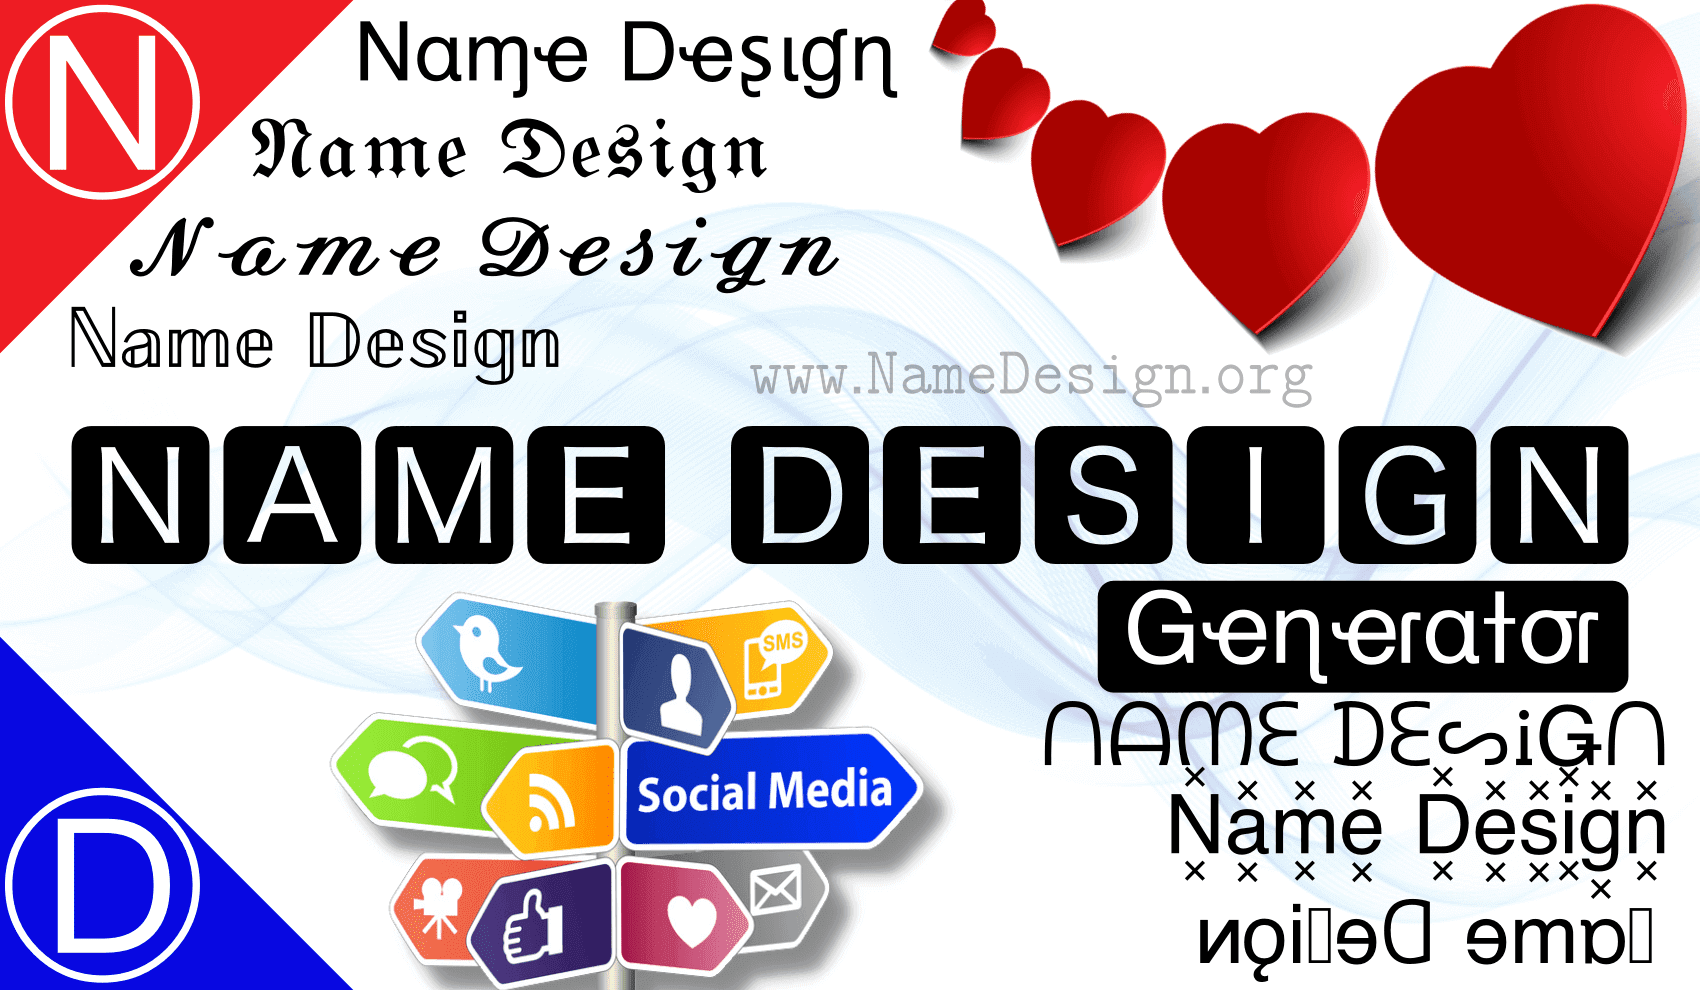 Name Design Generator